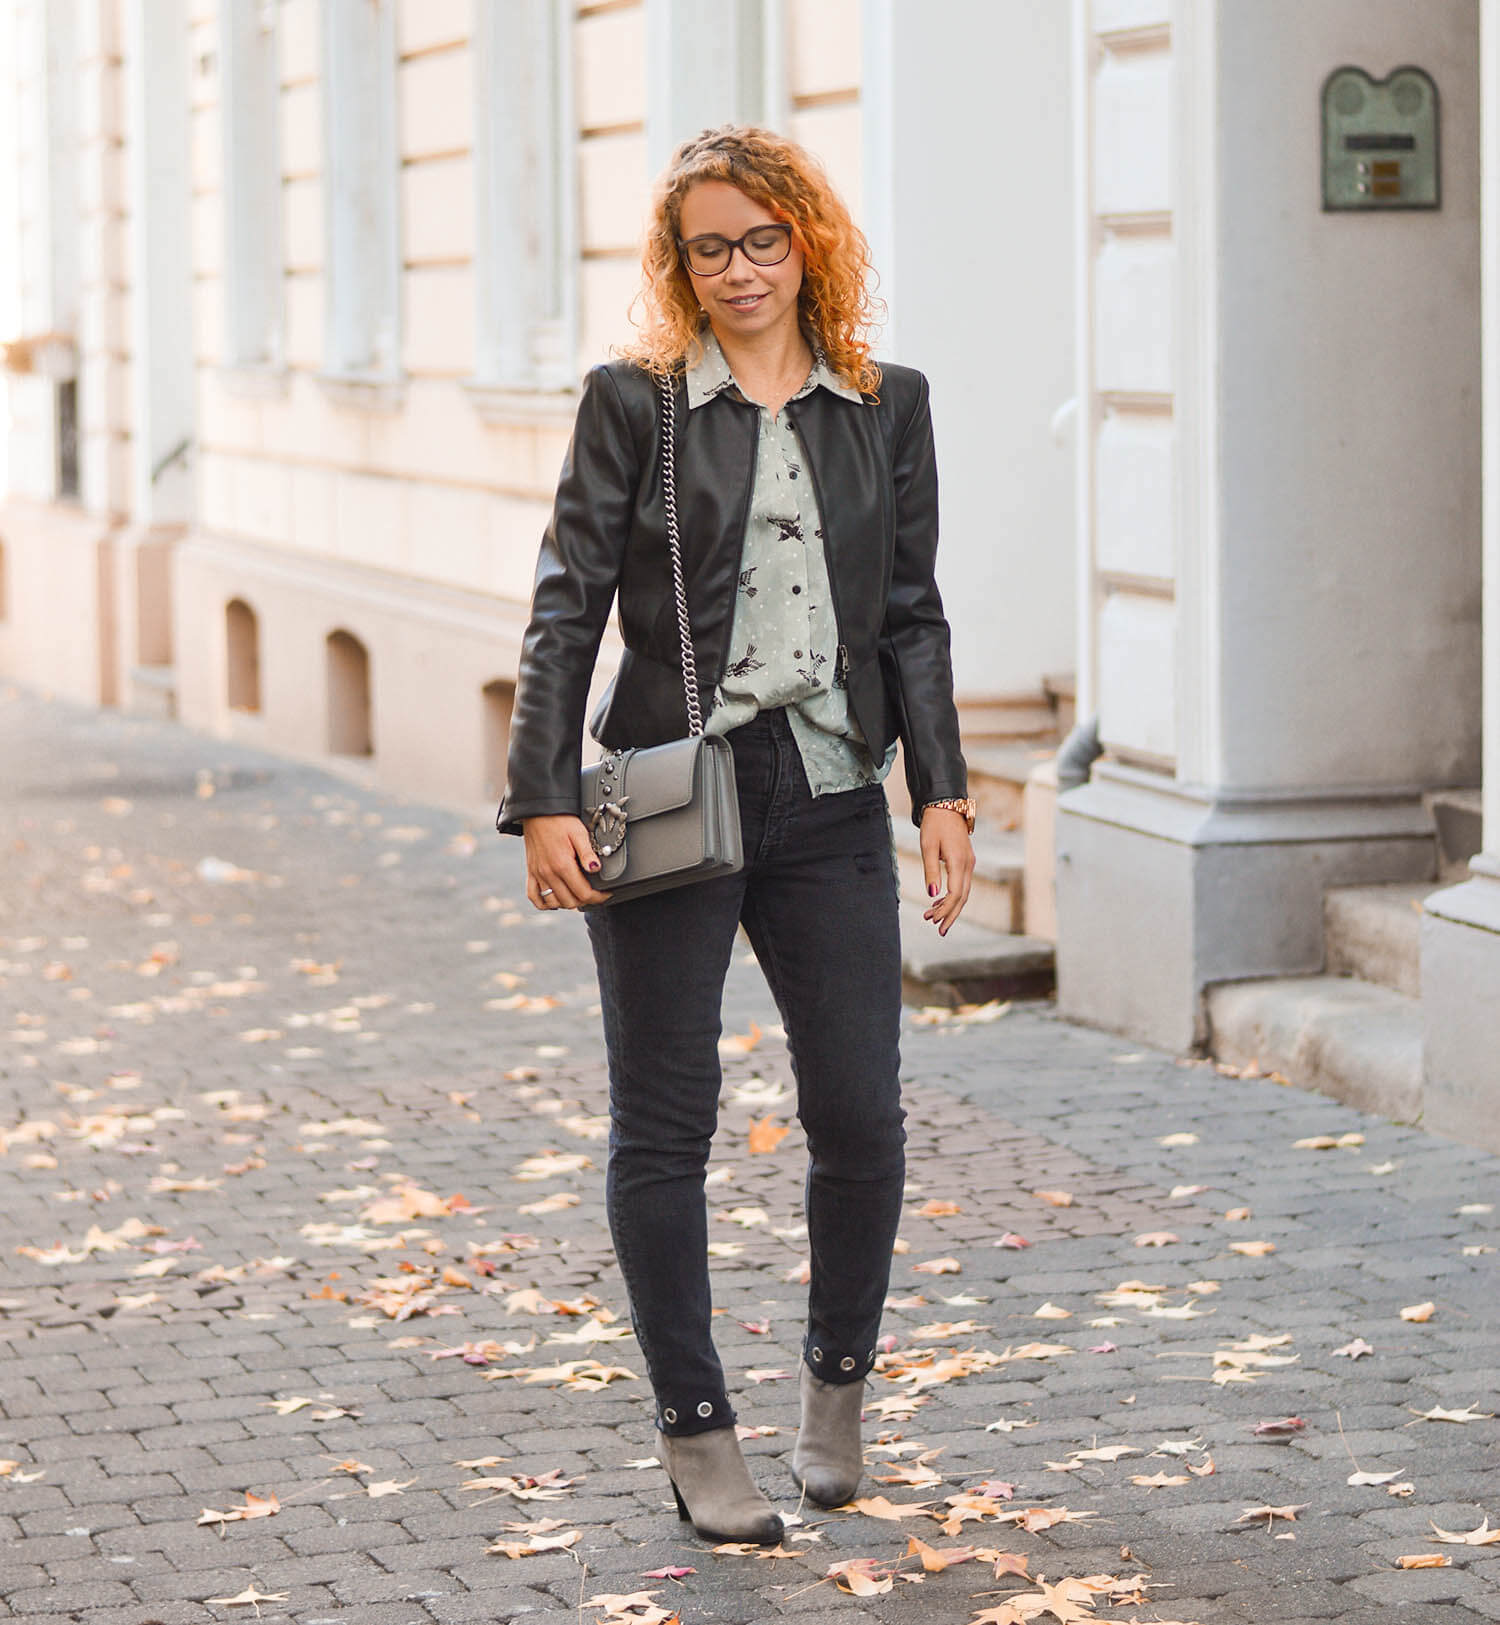 Leather-Jacket-Weather-Zara-Blouse-Rivet-Denim-Fall-Outfit-kationette-fashionblogger-germany